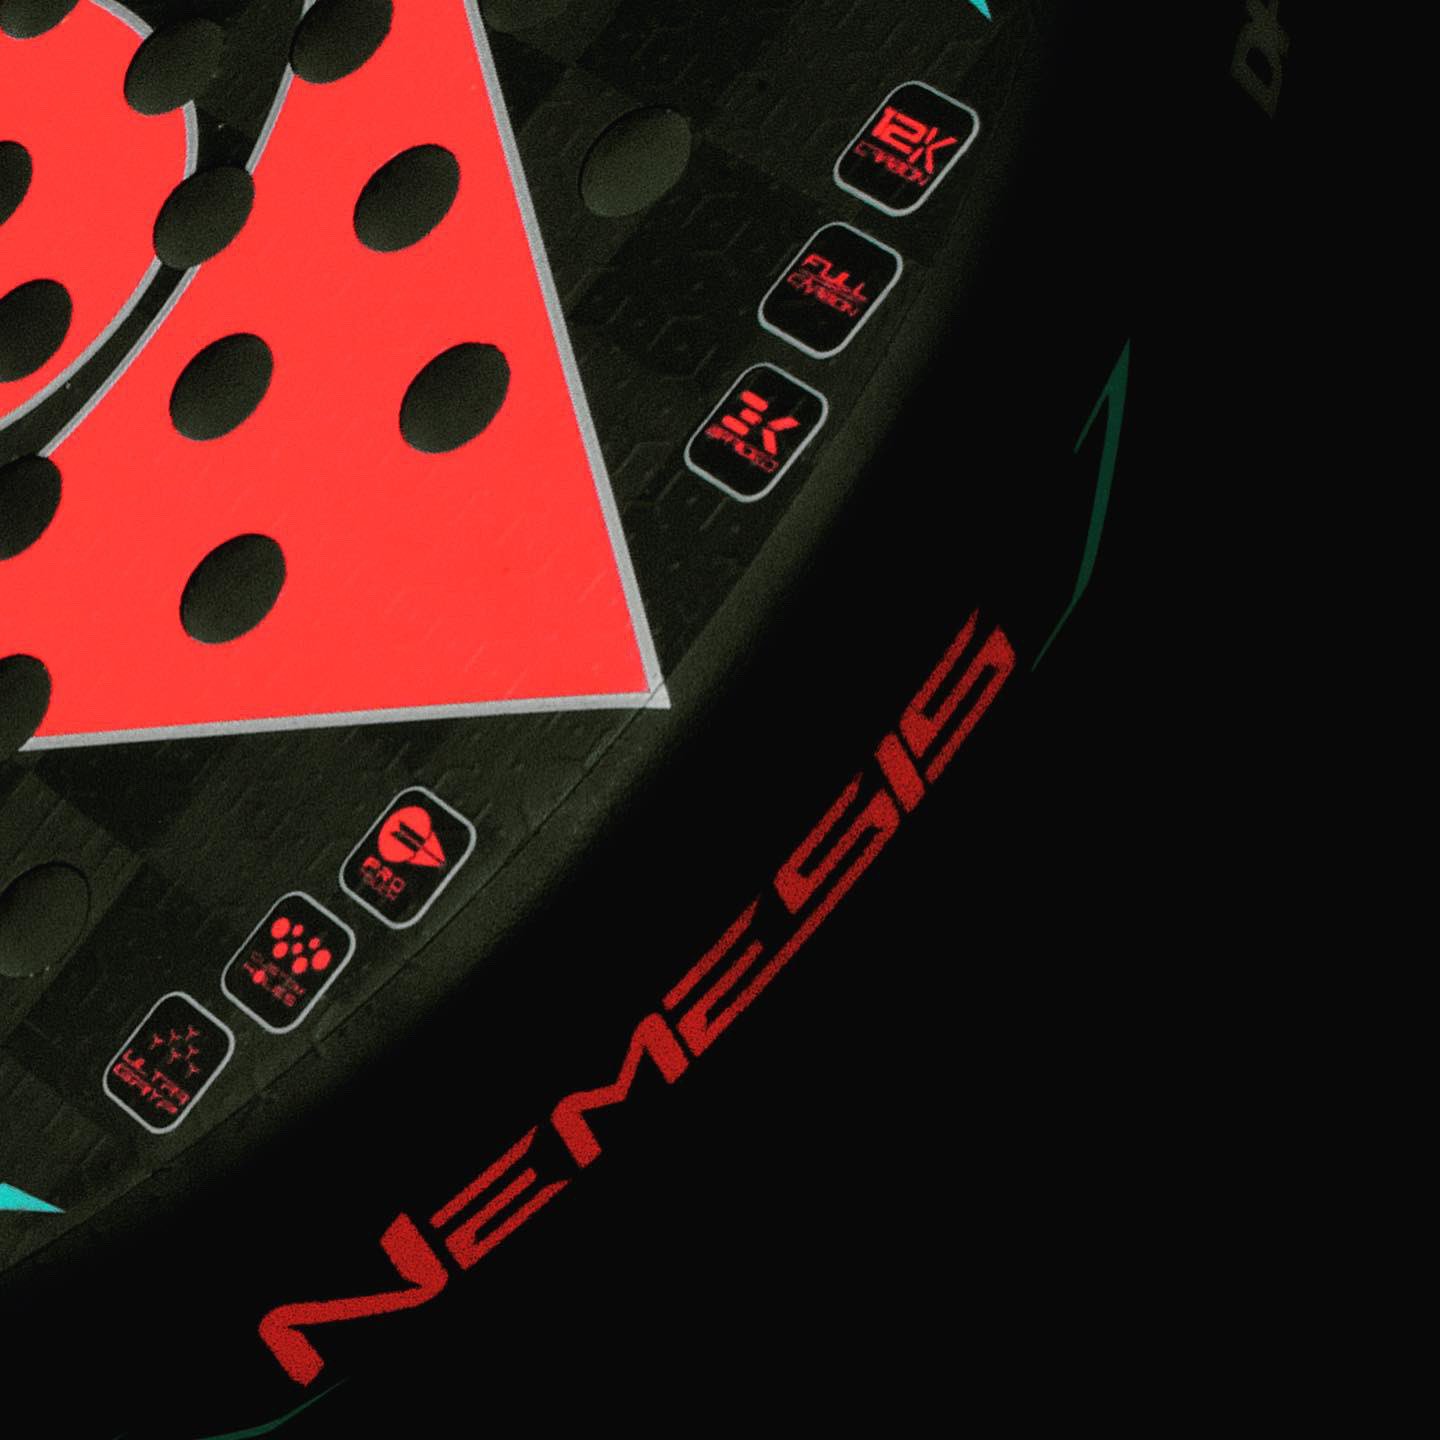 La nuova Dunlop Nemesis